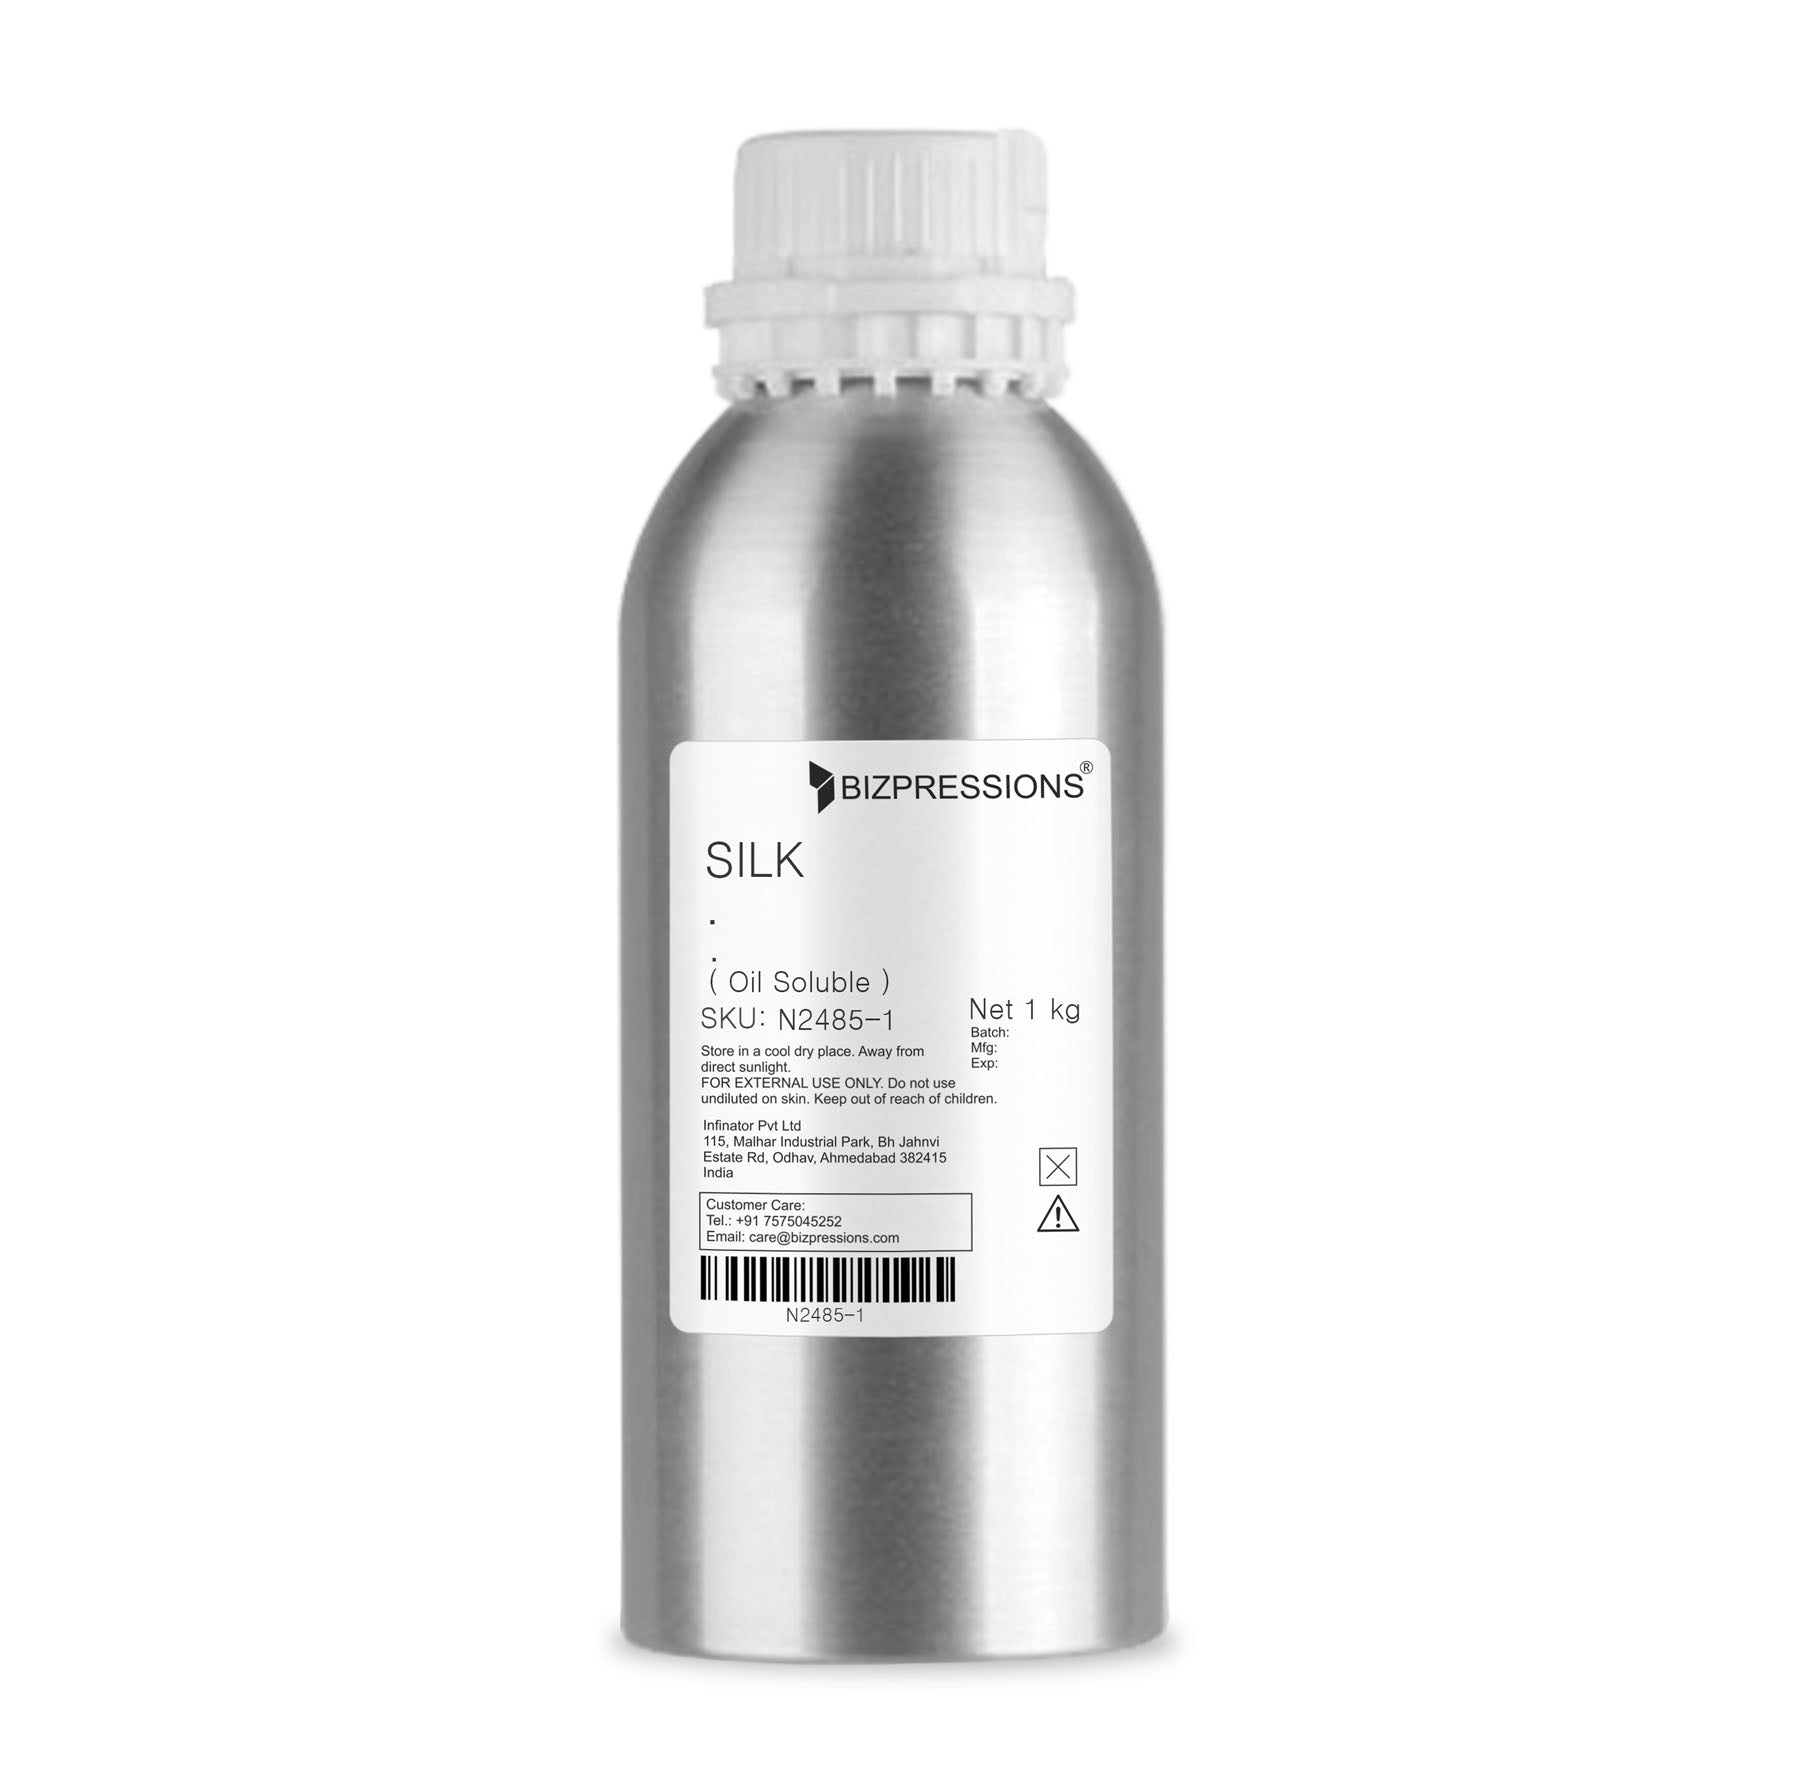 SILK - Fragrance ( Oil Soluble ) - 1 kg